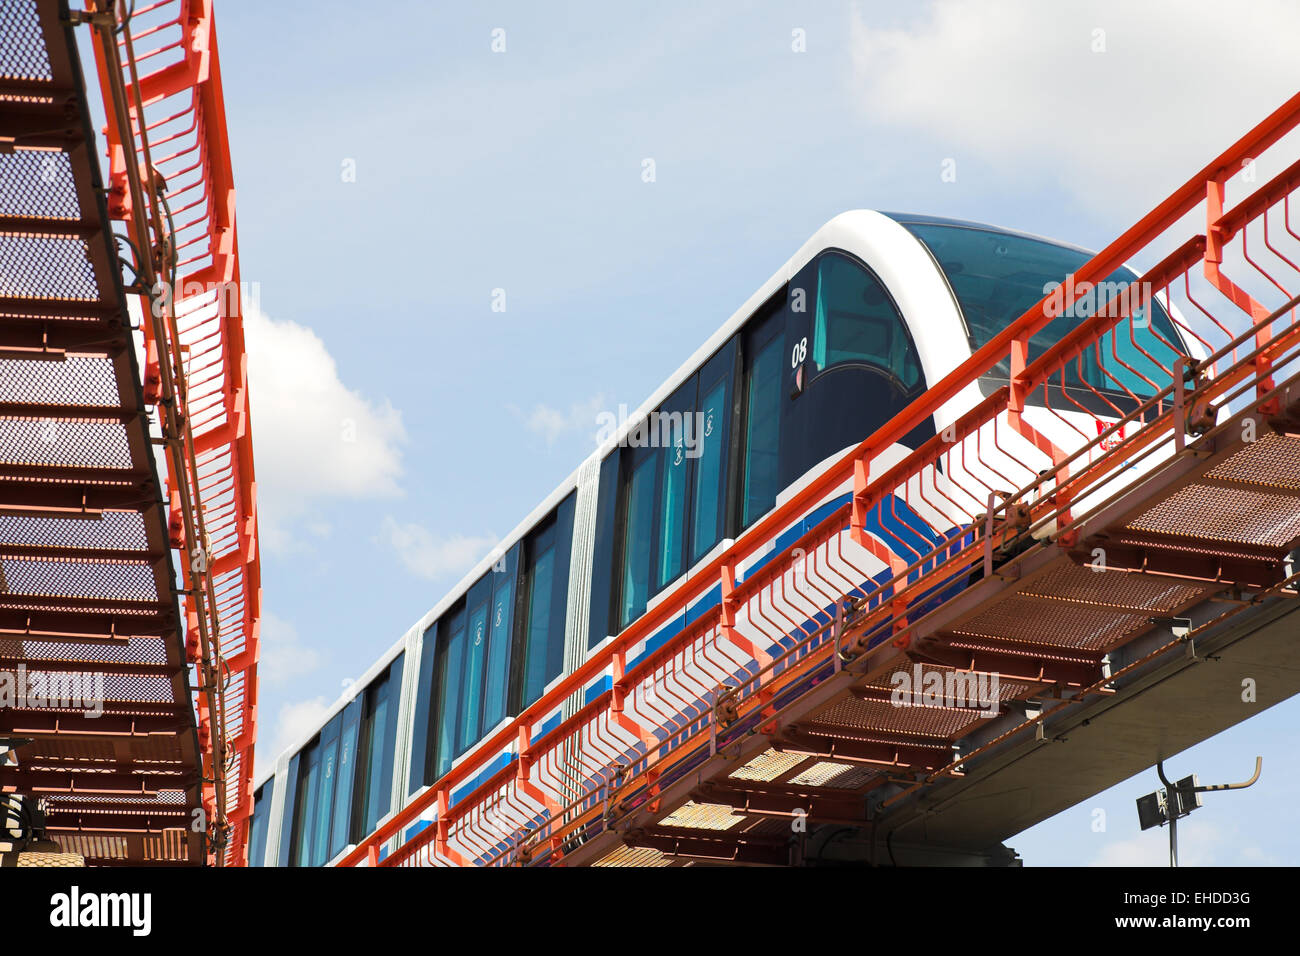 Monorail fast train on railway Stock Photo